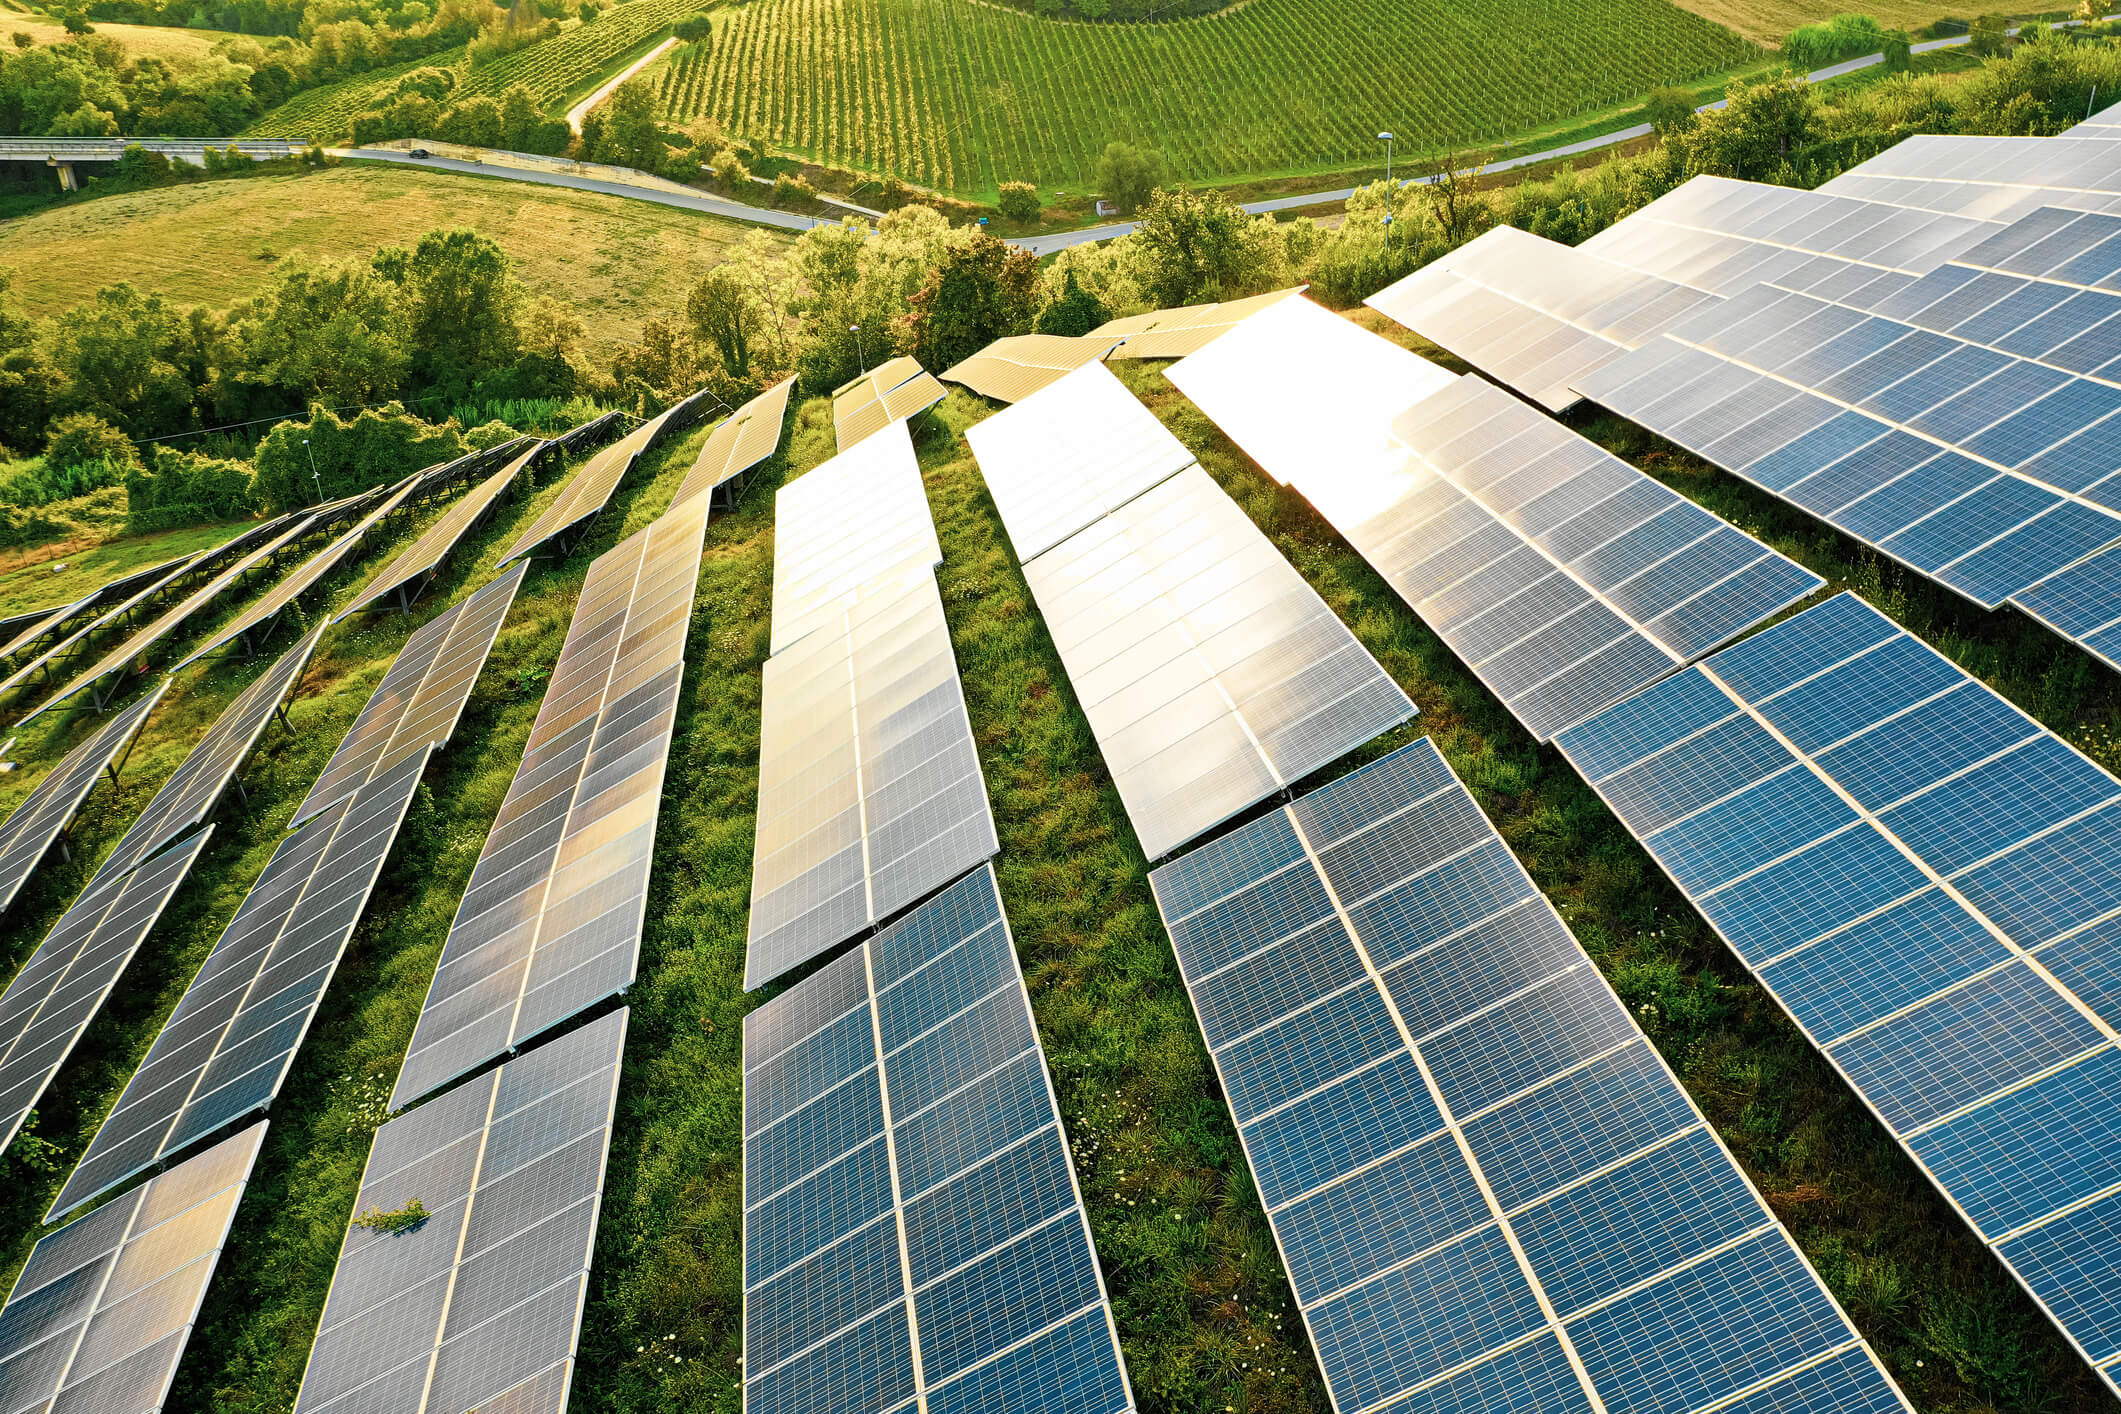 Solar panels installed on a rolling green landscape.